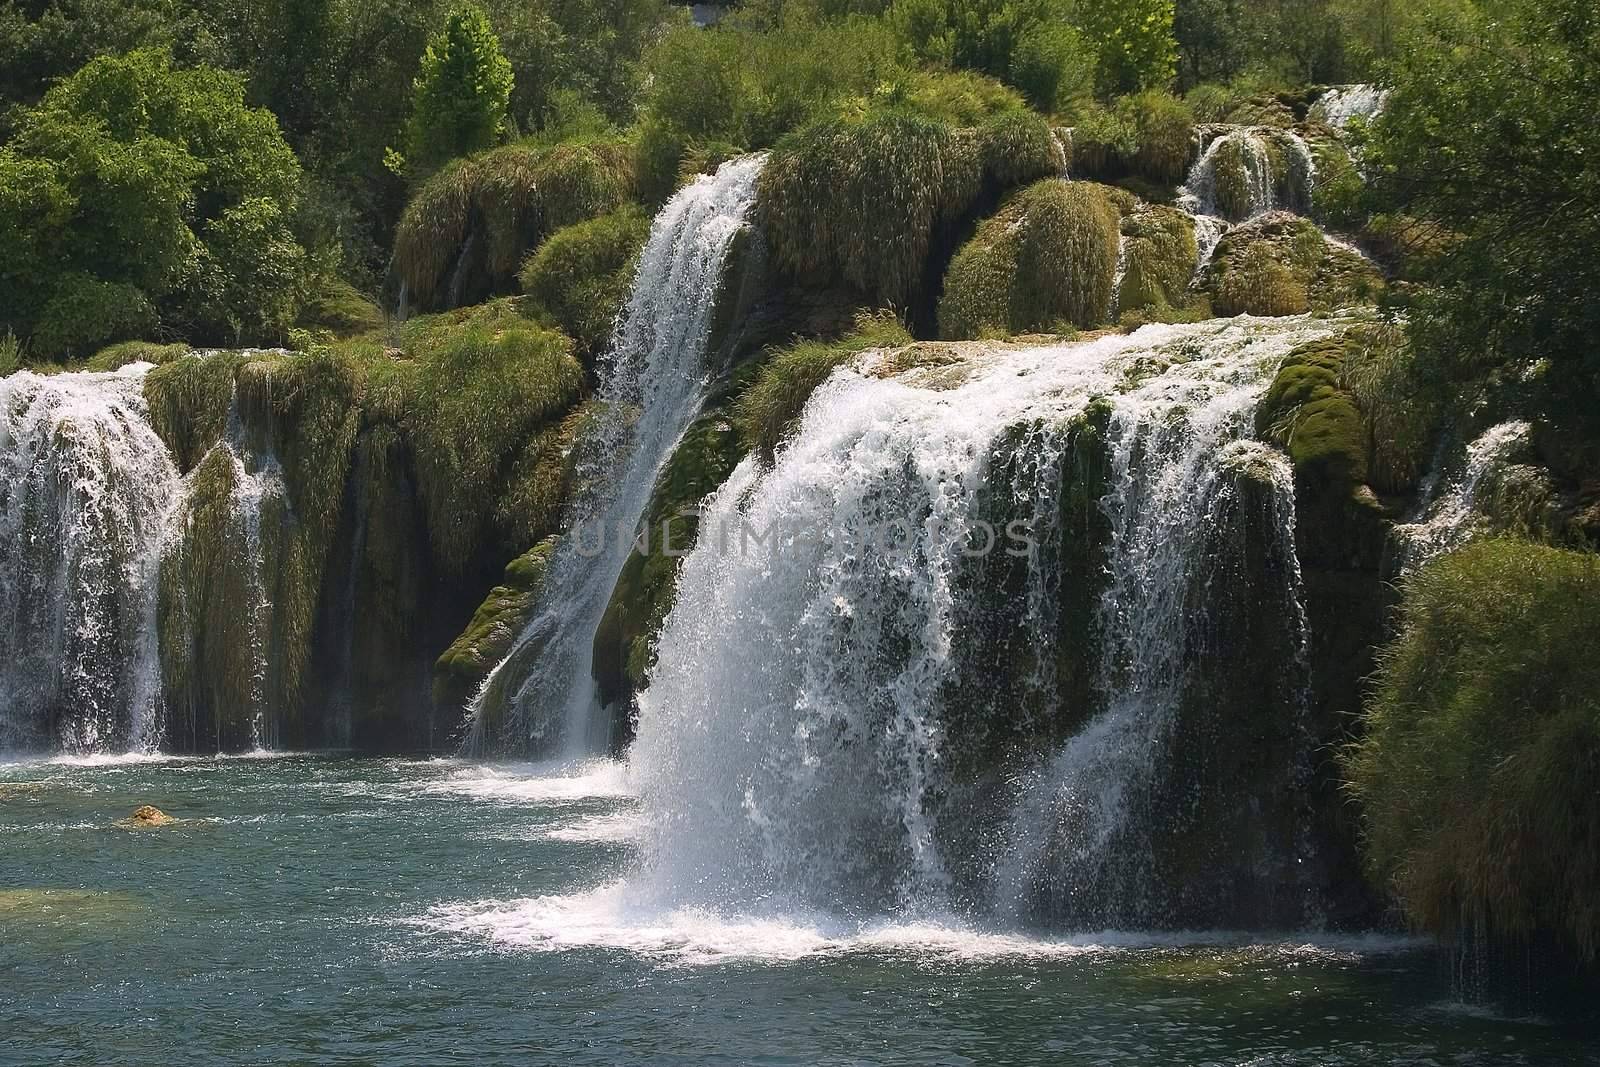 Waterfall by miradrozdowski